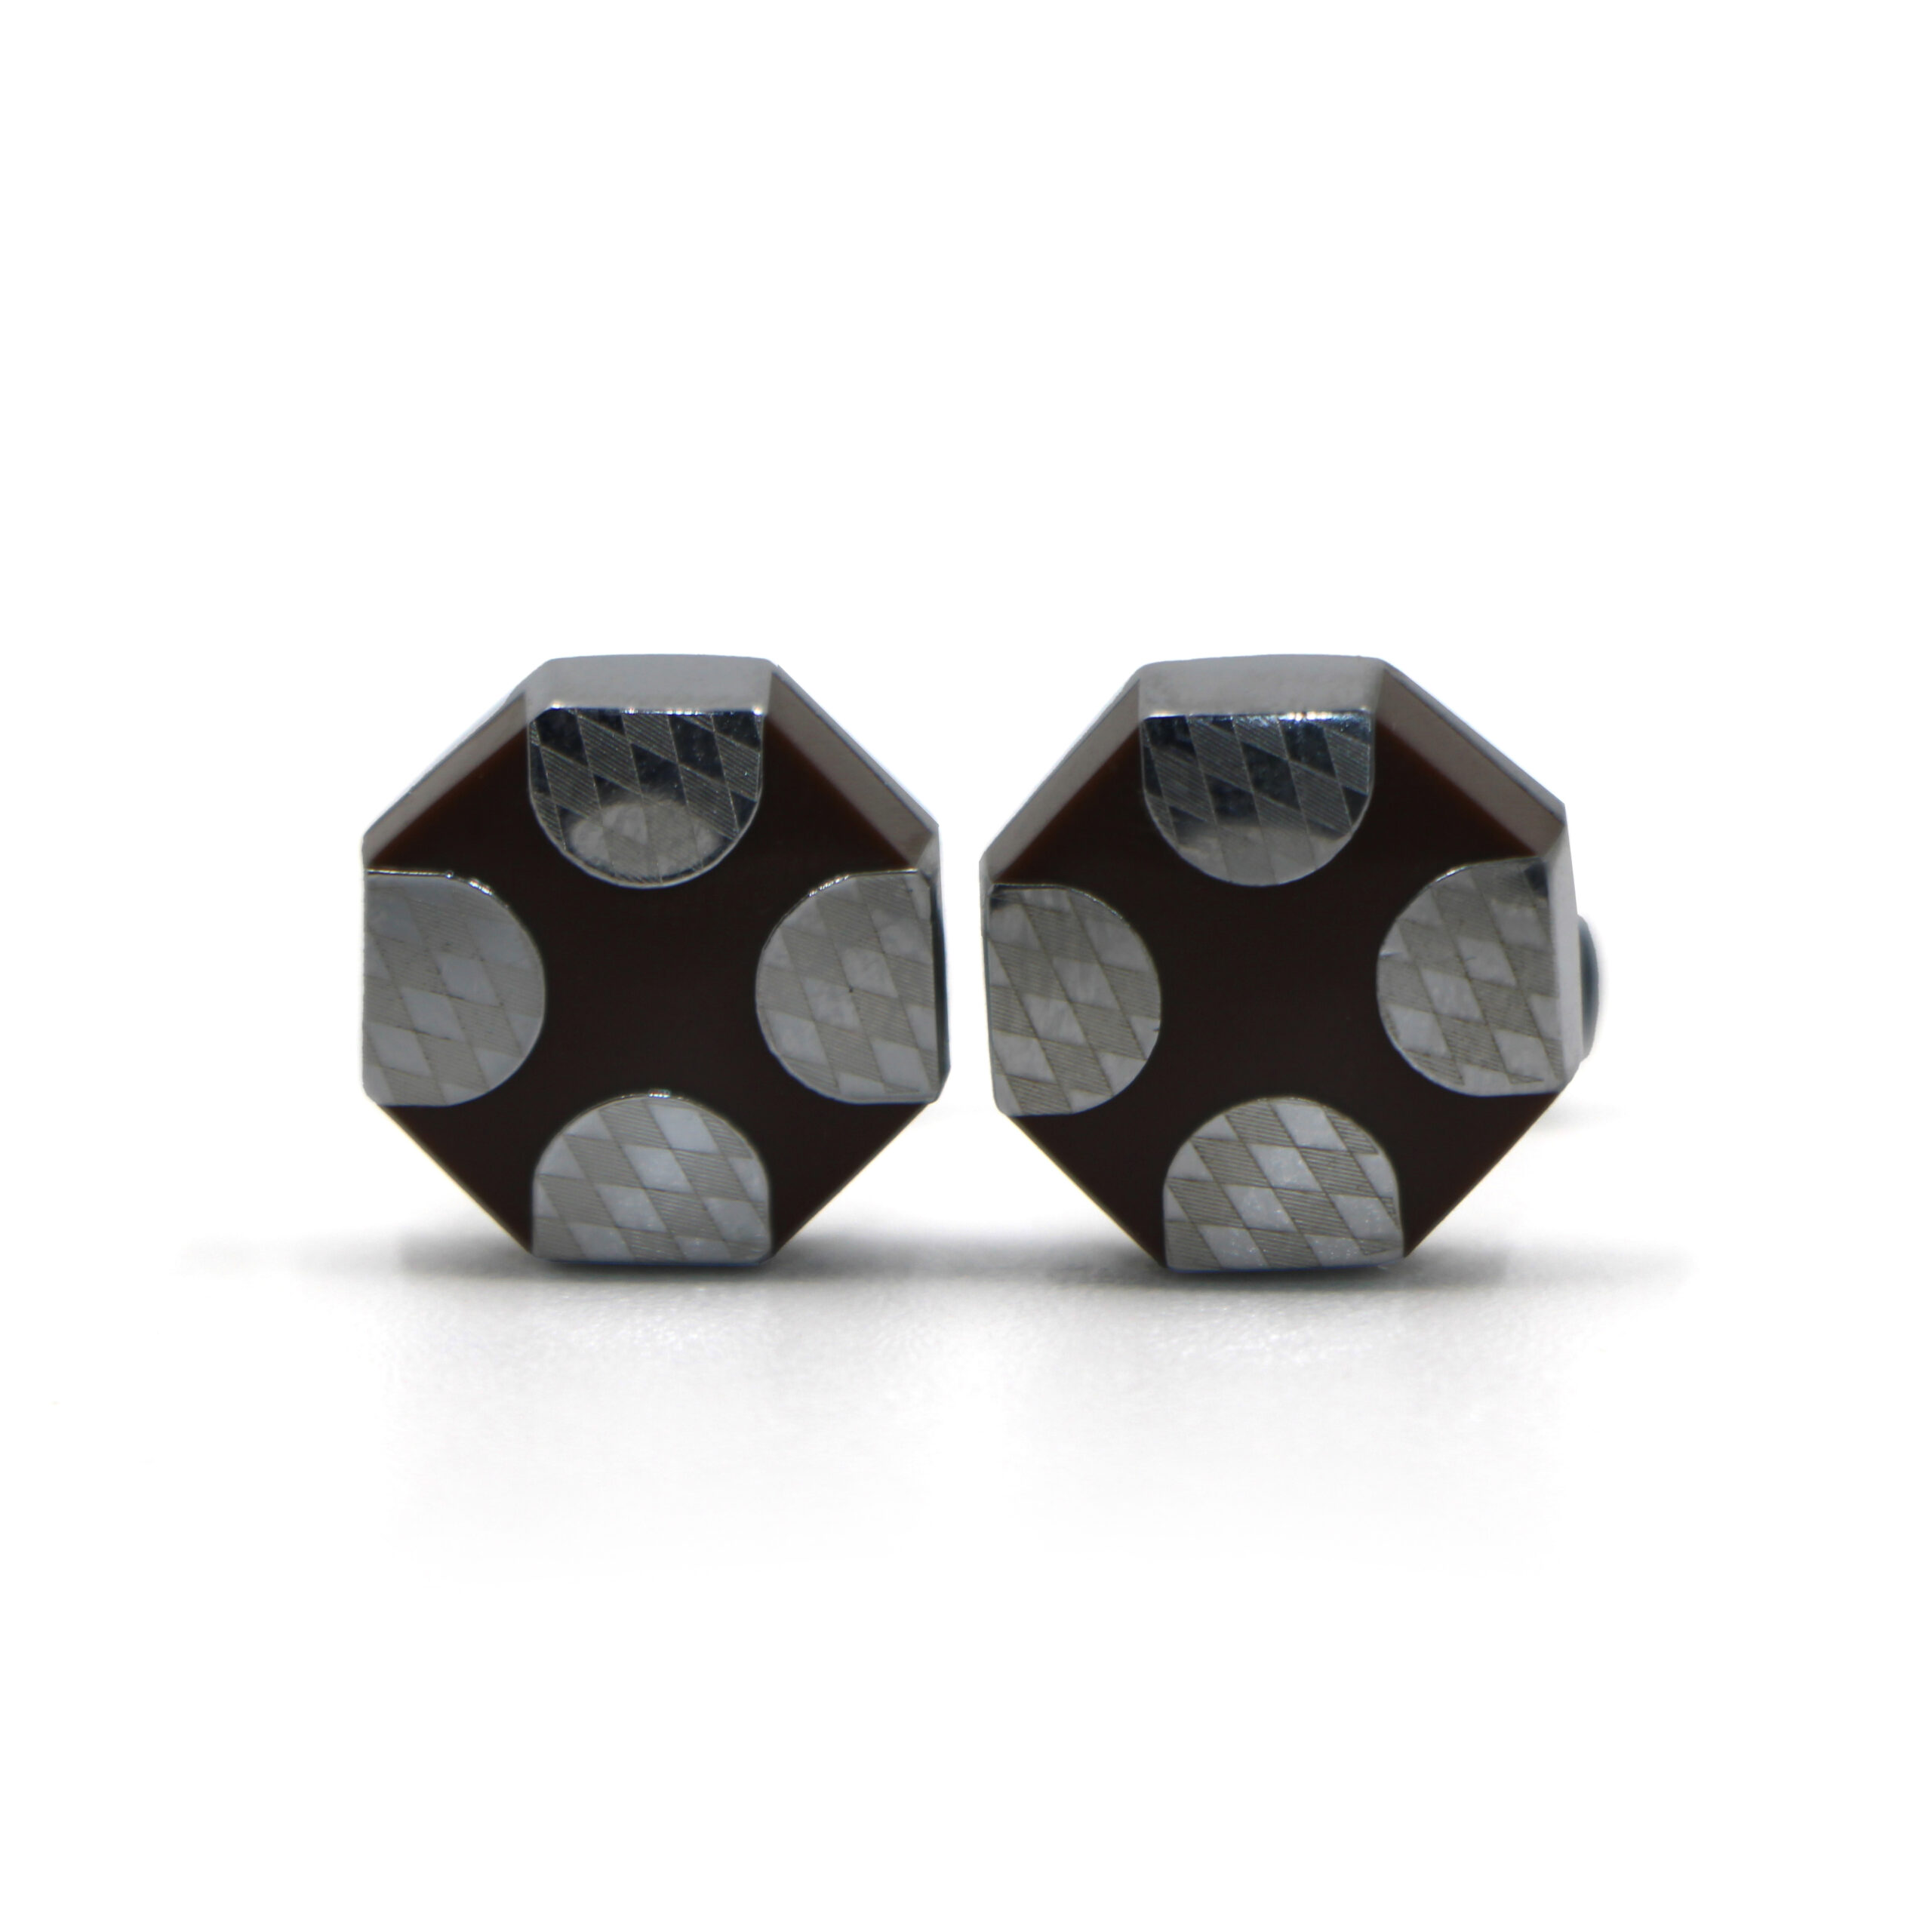 Cufflers Novelty Cufflinks with Free Gift Box – Black & Silver Hexagon Design – CU-2023